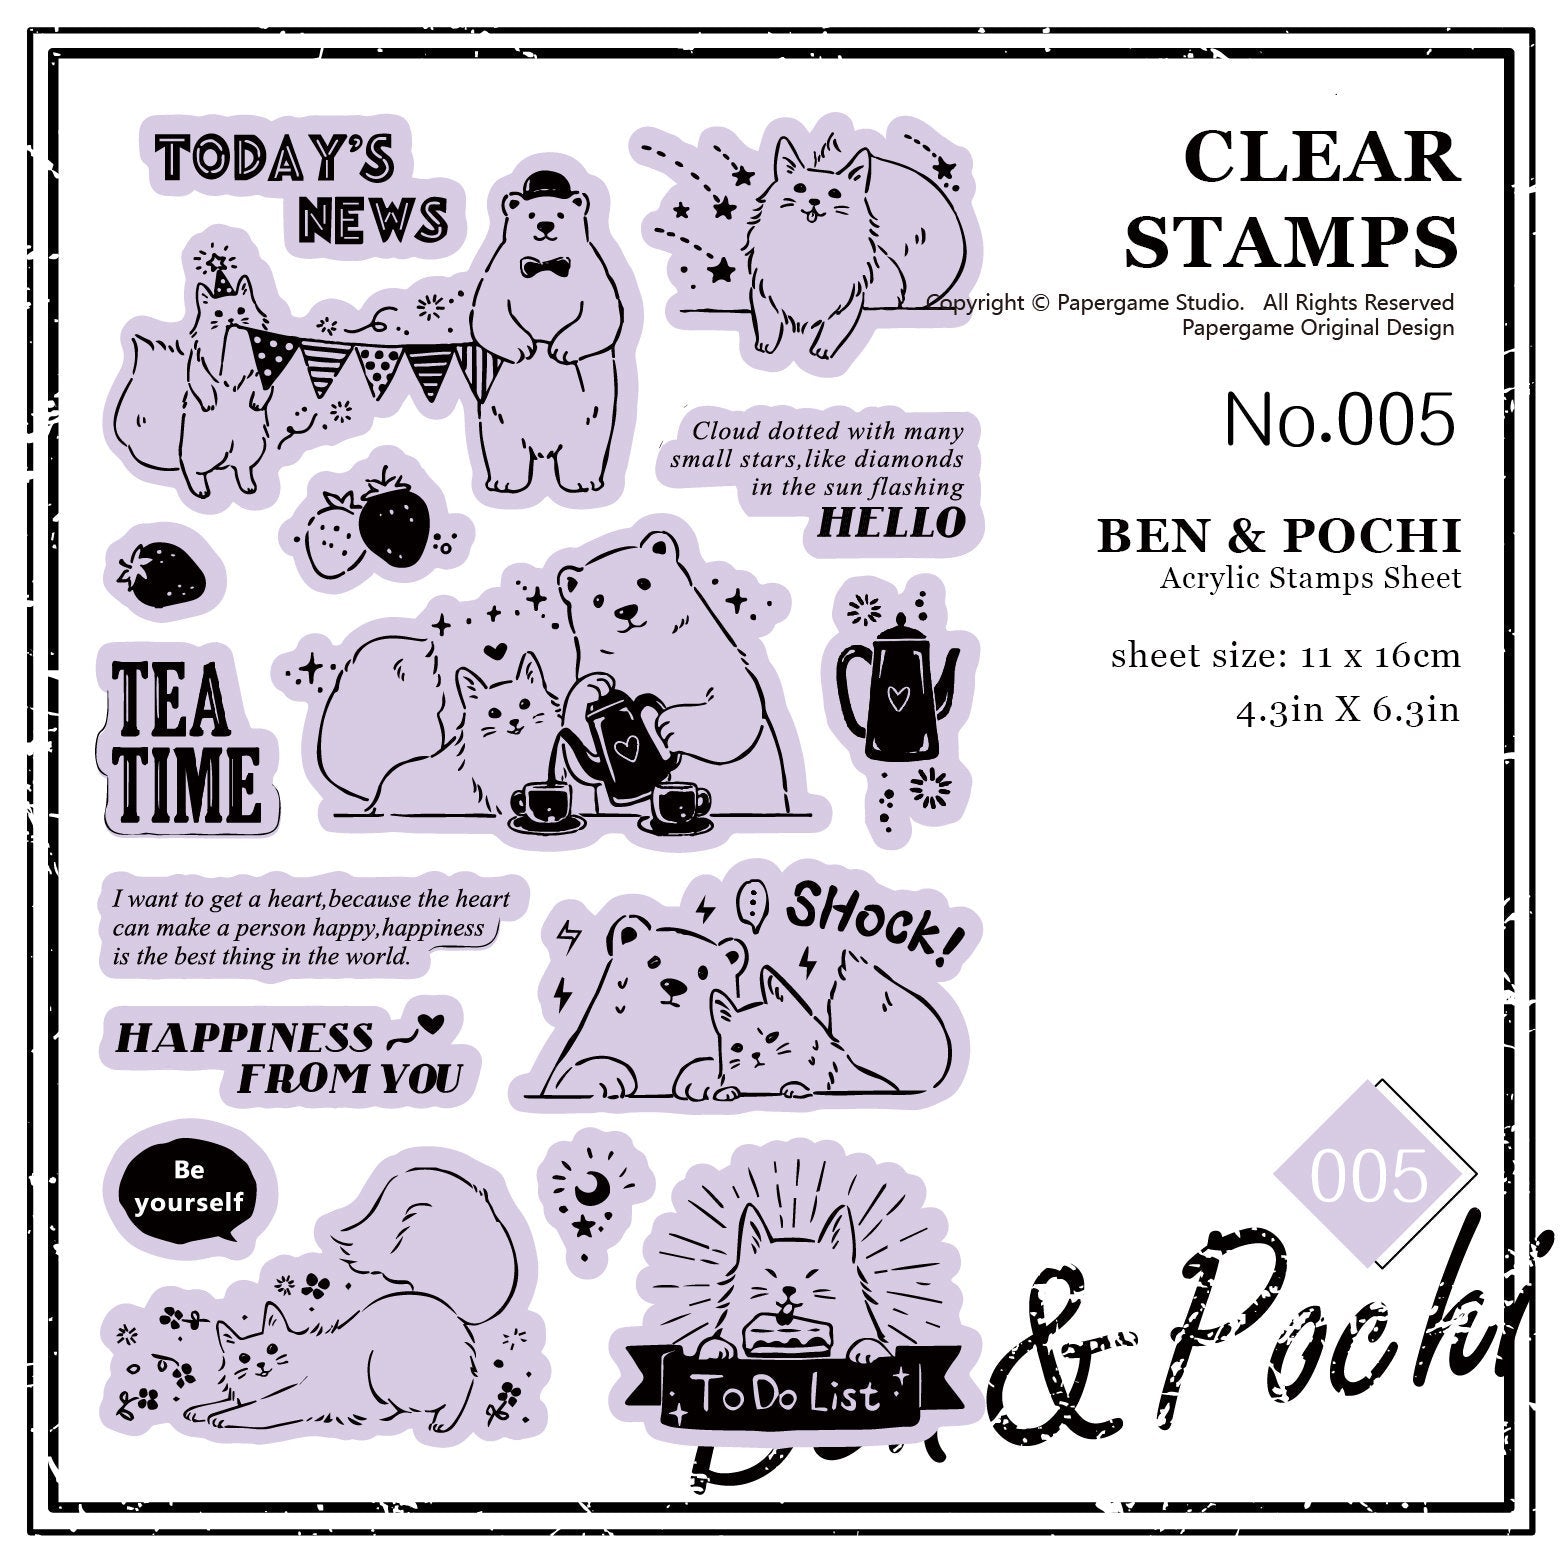 Ben and Pochi Acrylic Stamp Set